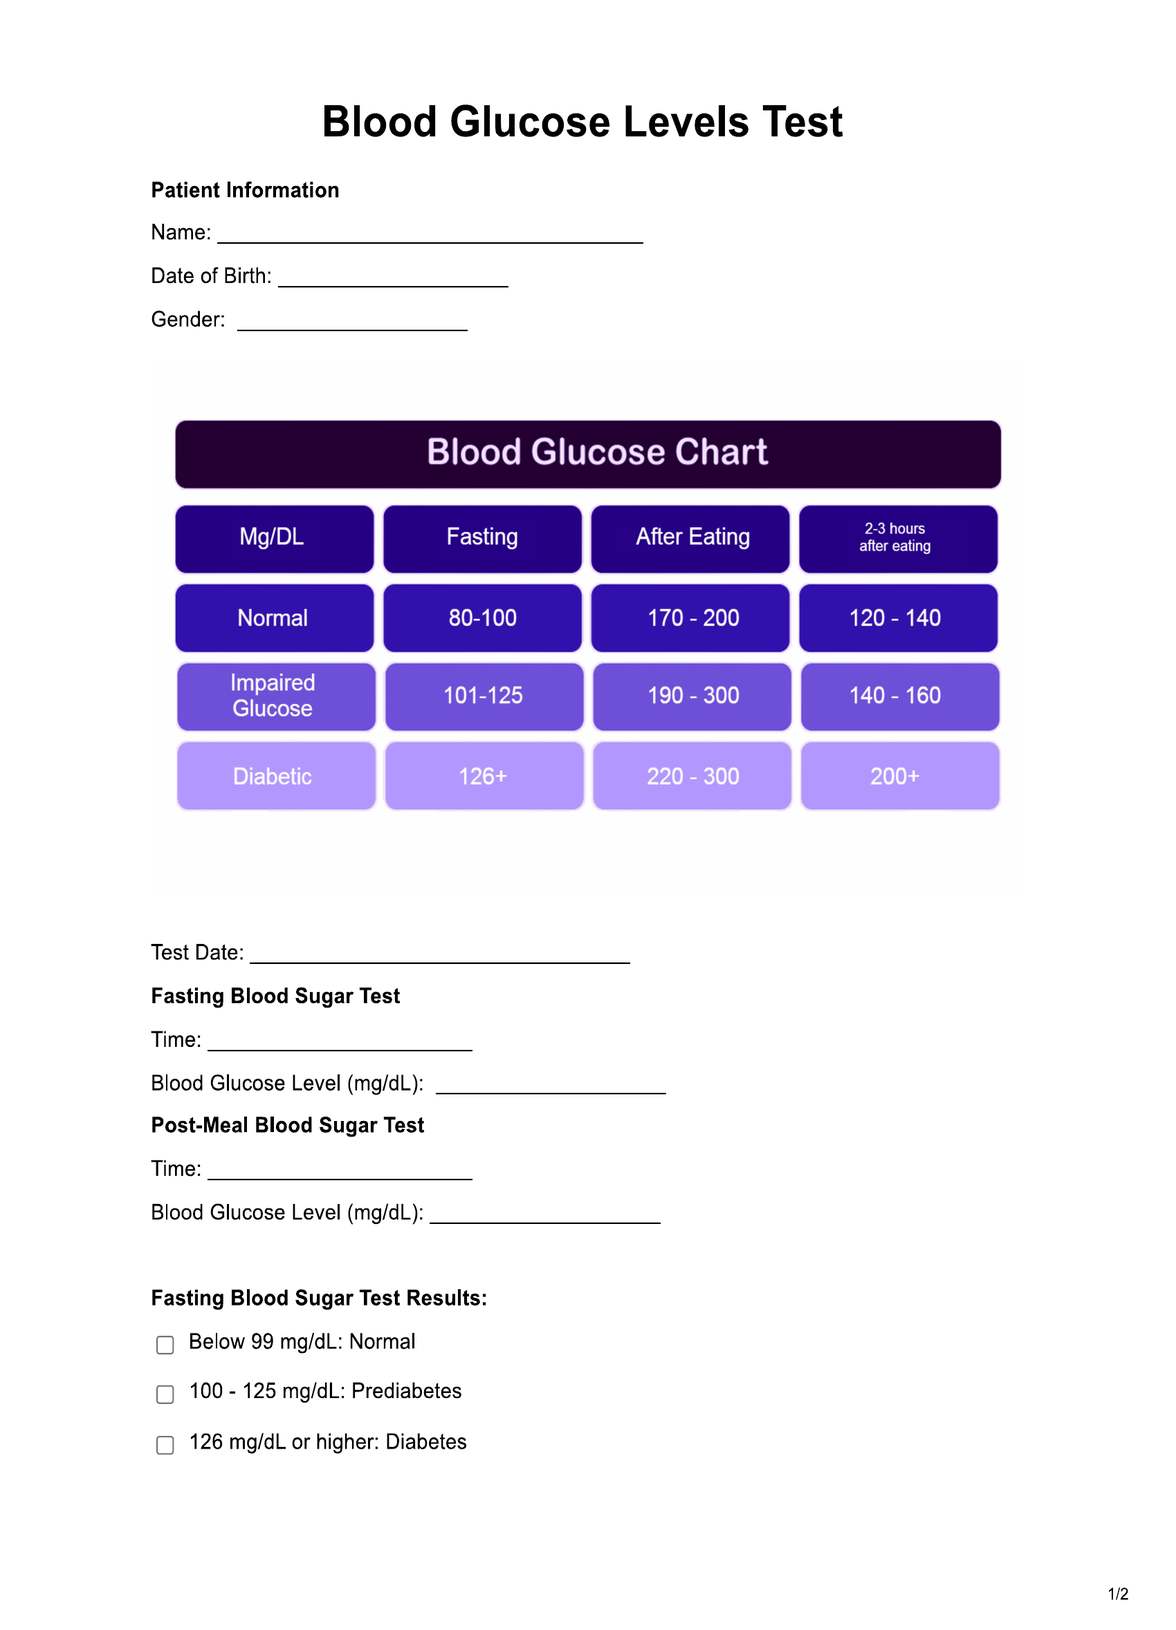 Blood Glucose Levels PDF Example